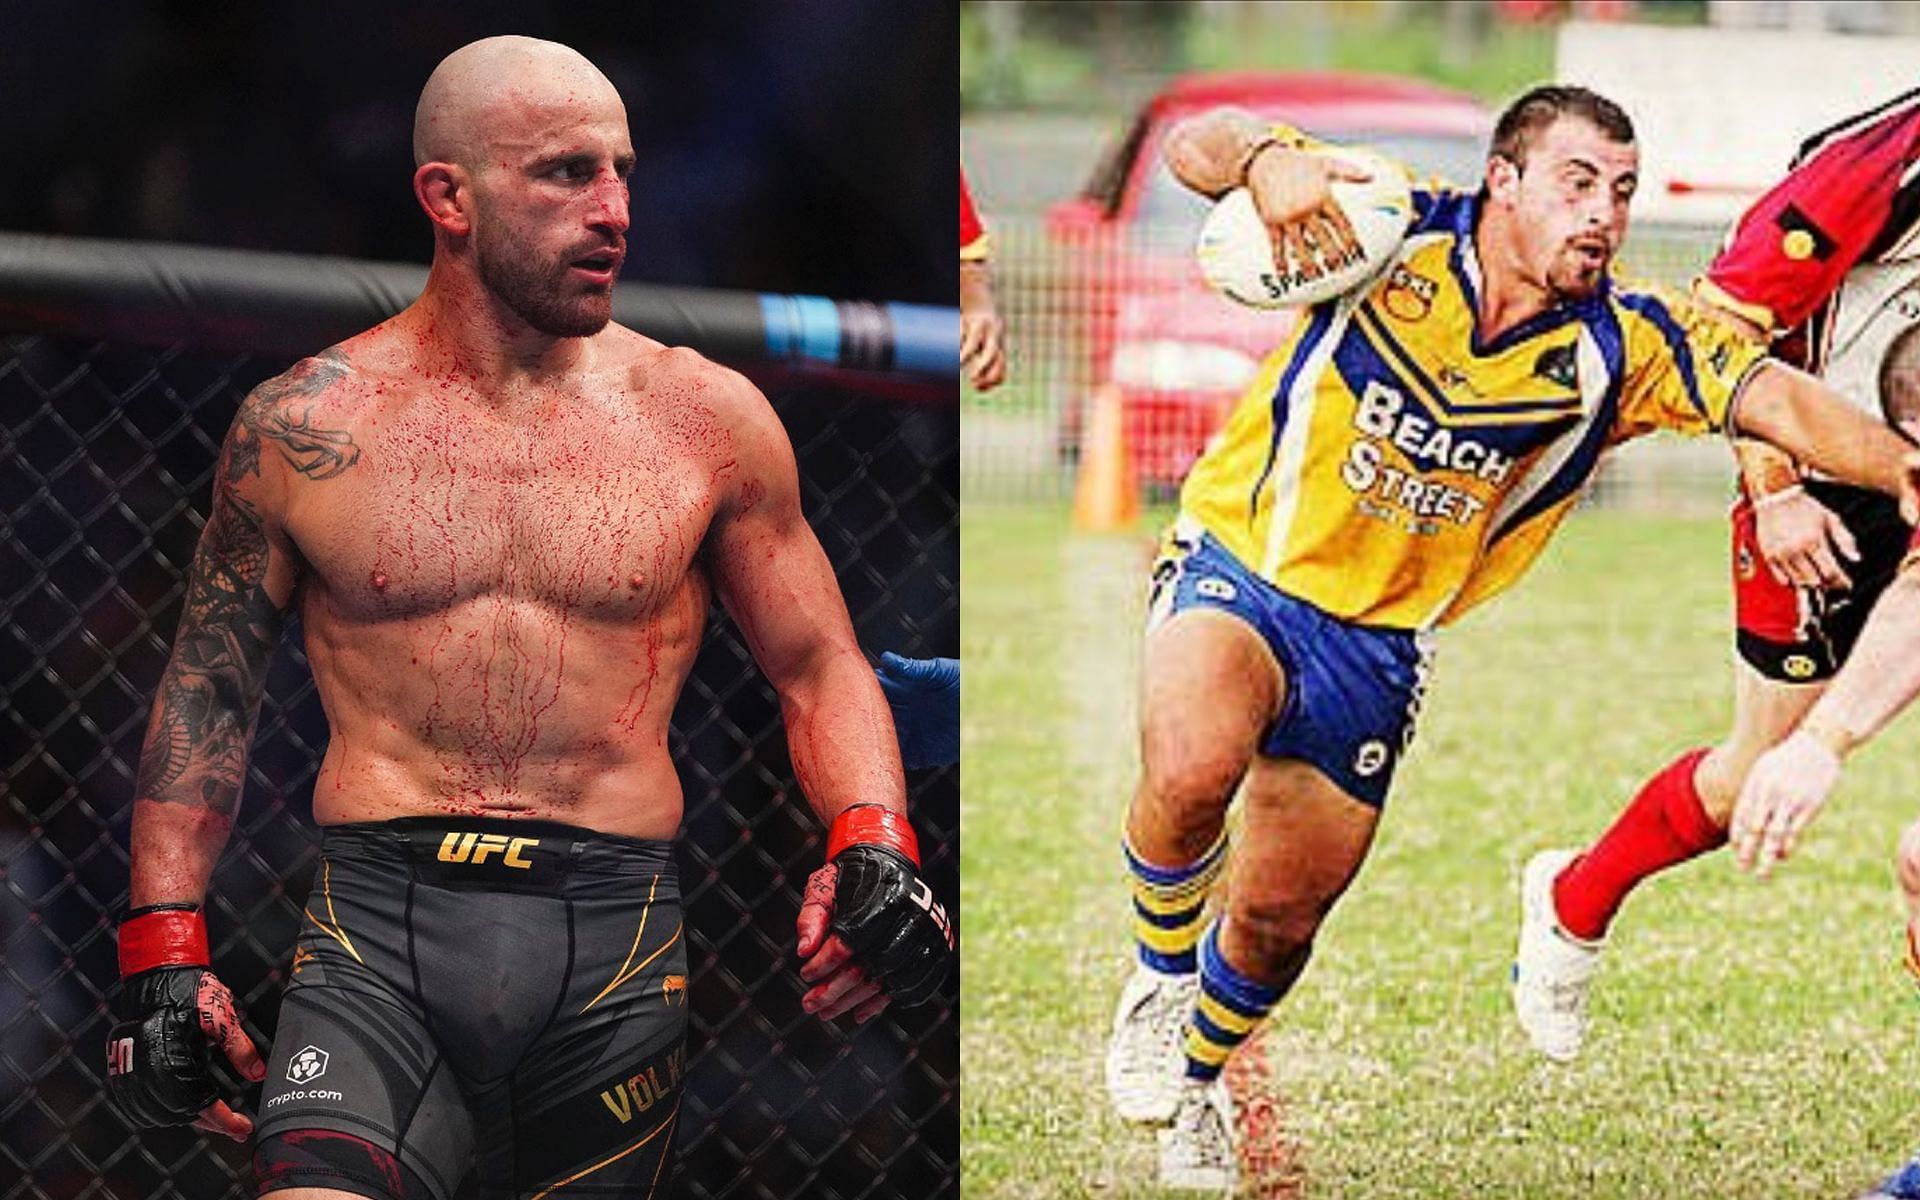 Alexander Volkanovski now (left) and during his Rugby days (right) (Images via @alexvolkanovski Instagram)